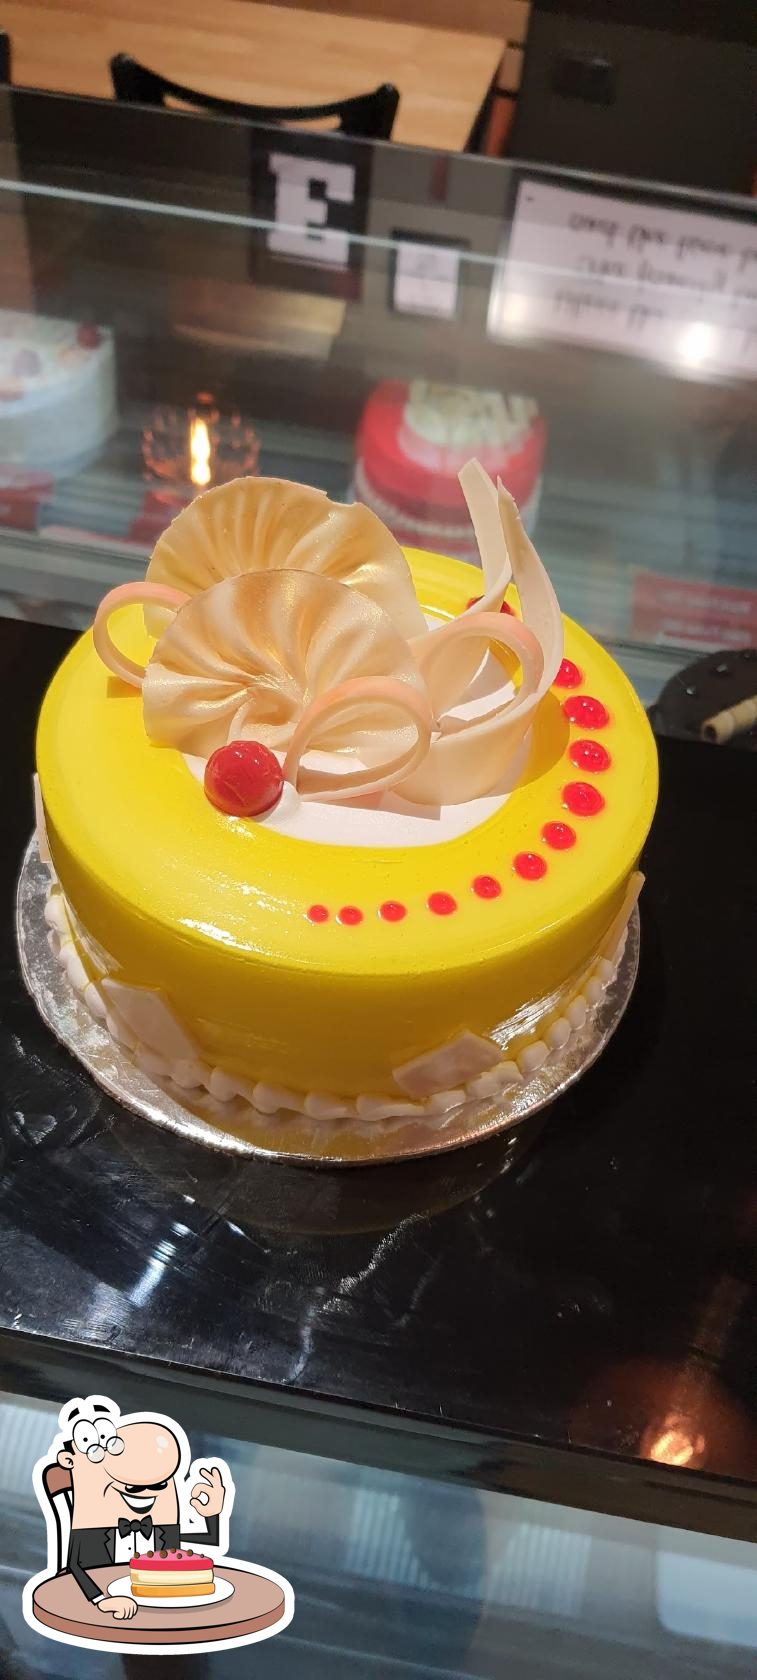 Dark Temptation Cake @ Best Price | Giftacrossindia